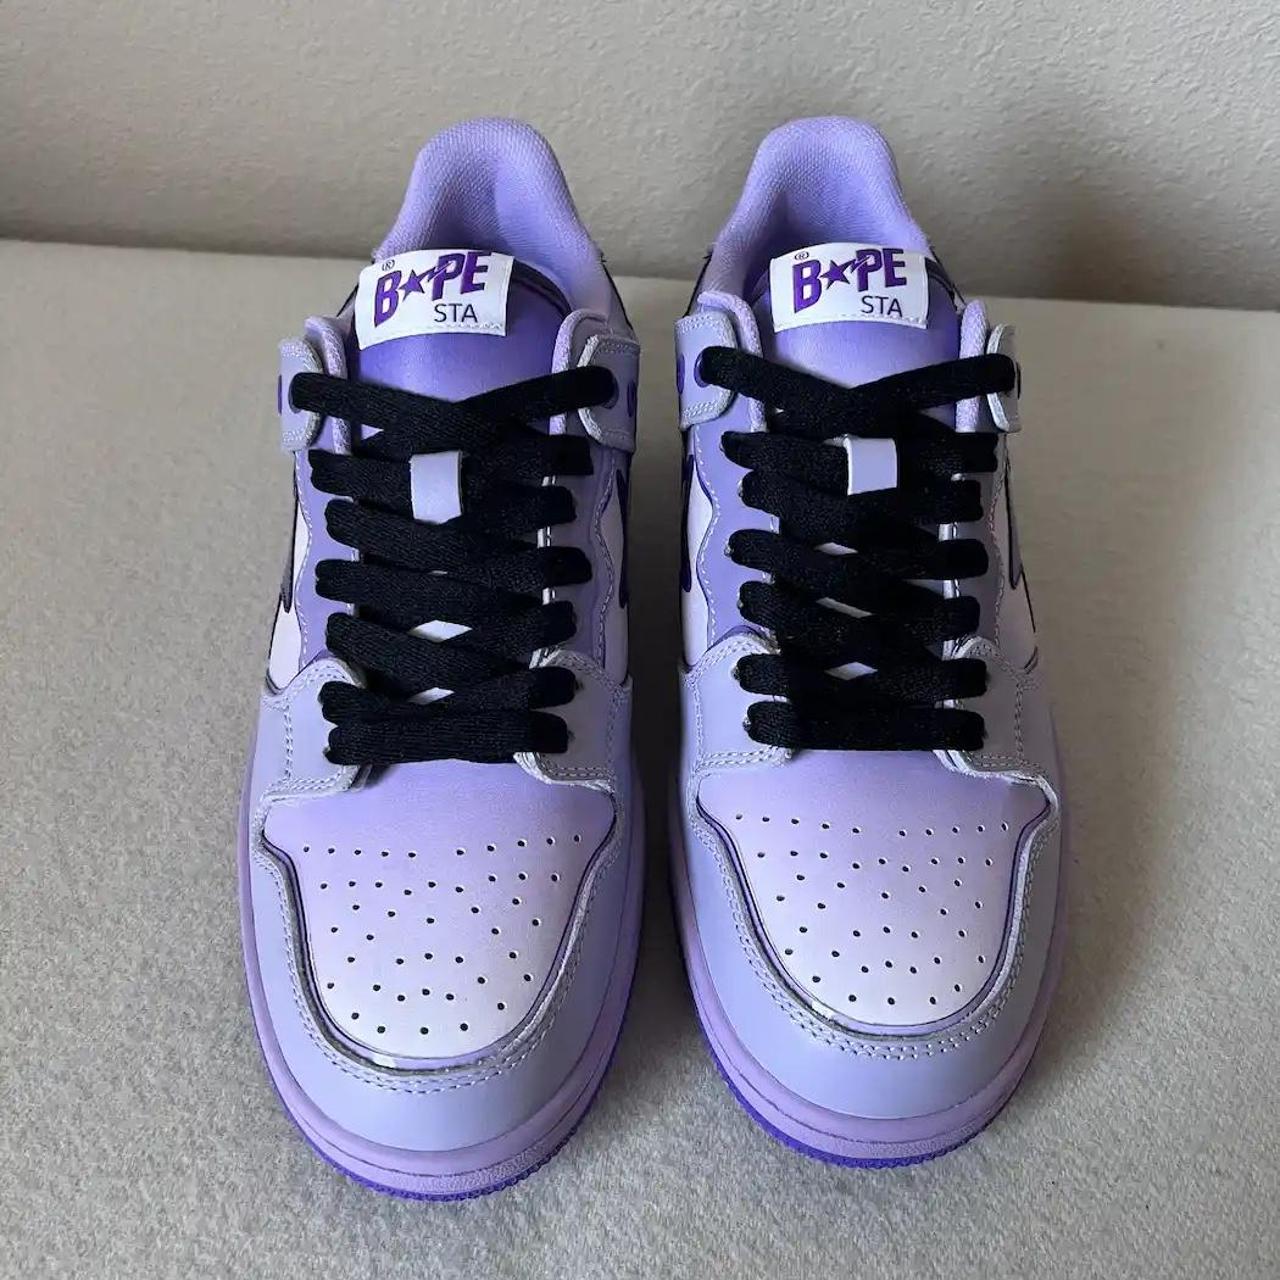 Bape Sk8 Sta Purple Sneakers - box not included... - Depop